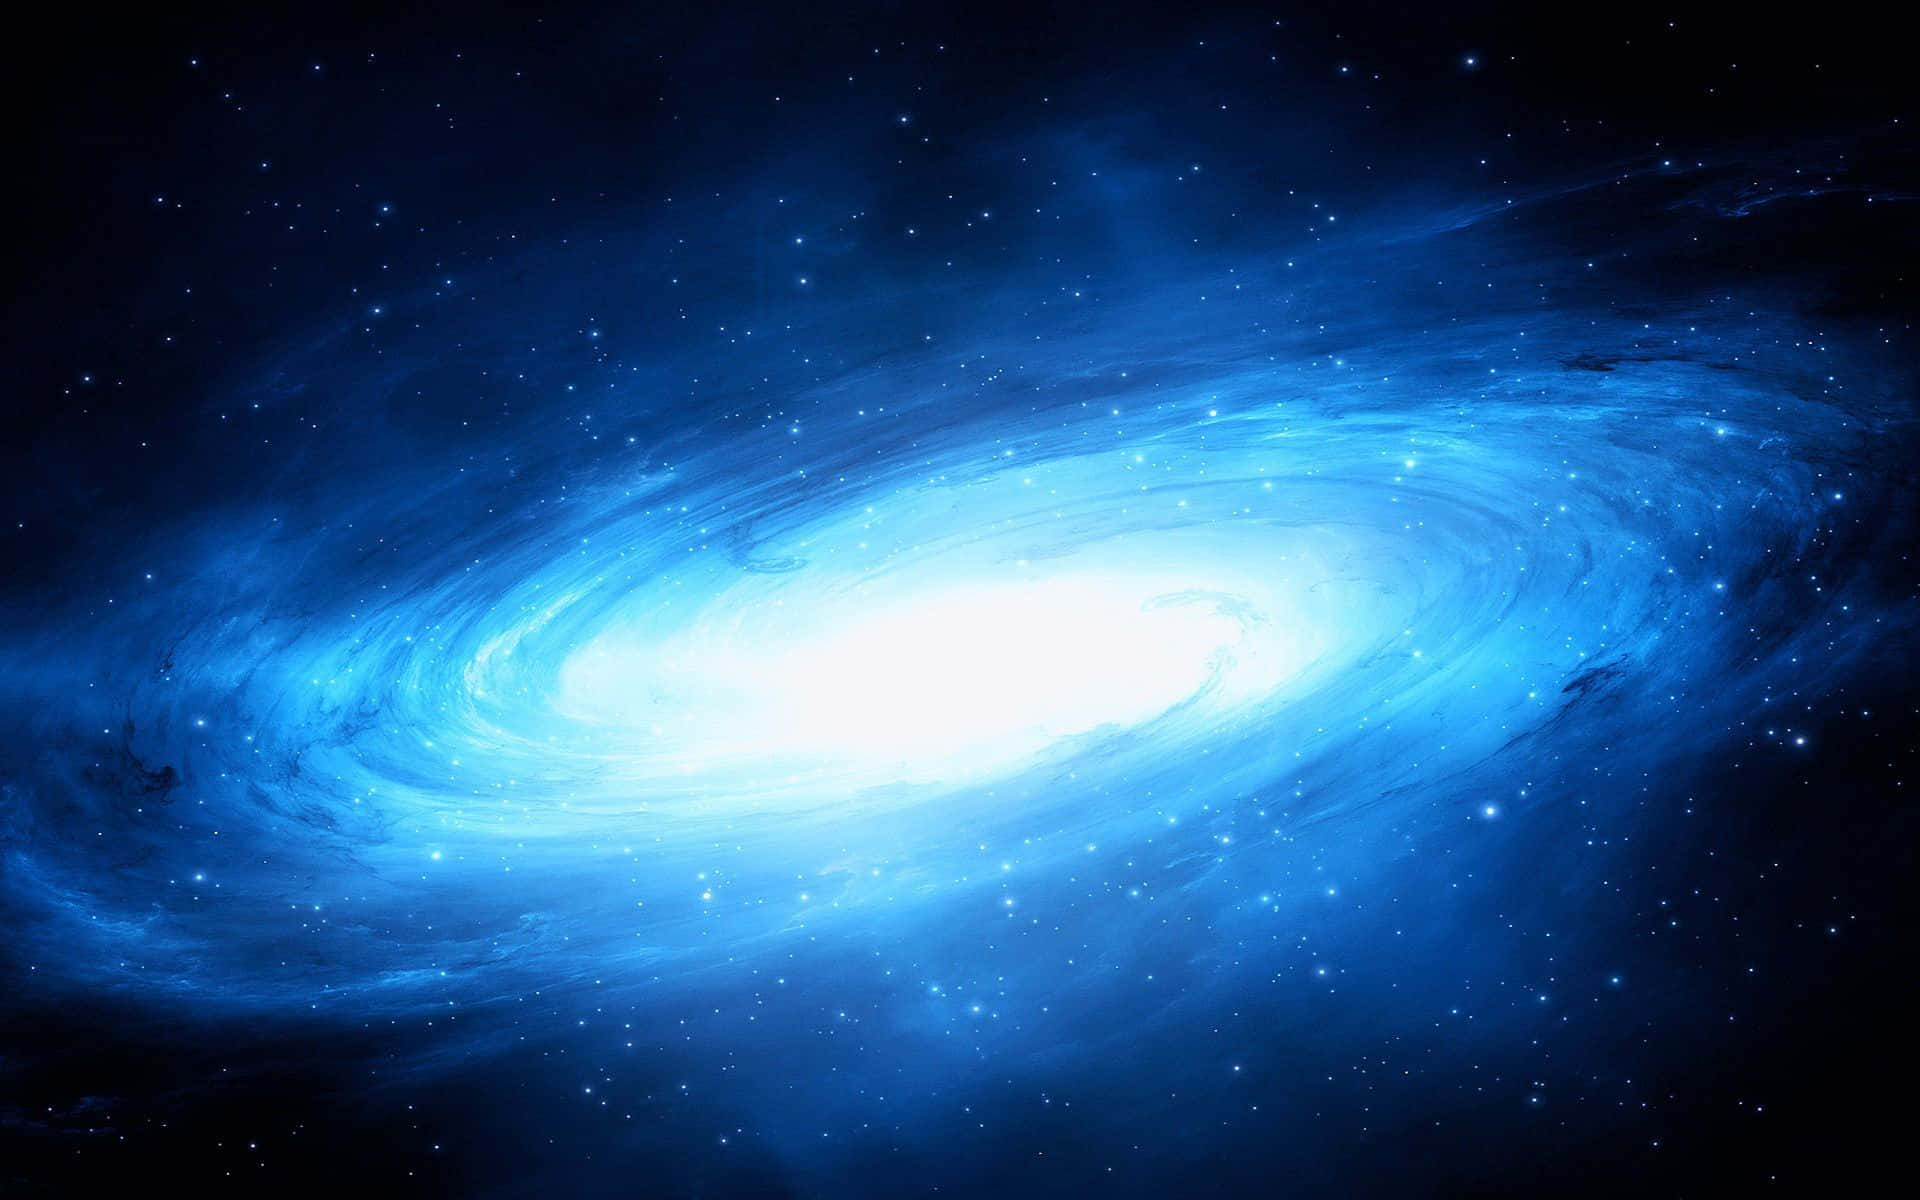 Take A Trip To The Cool Blue Galaxy Wallpaper